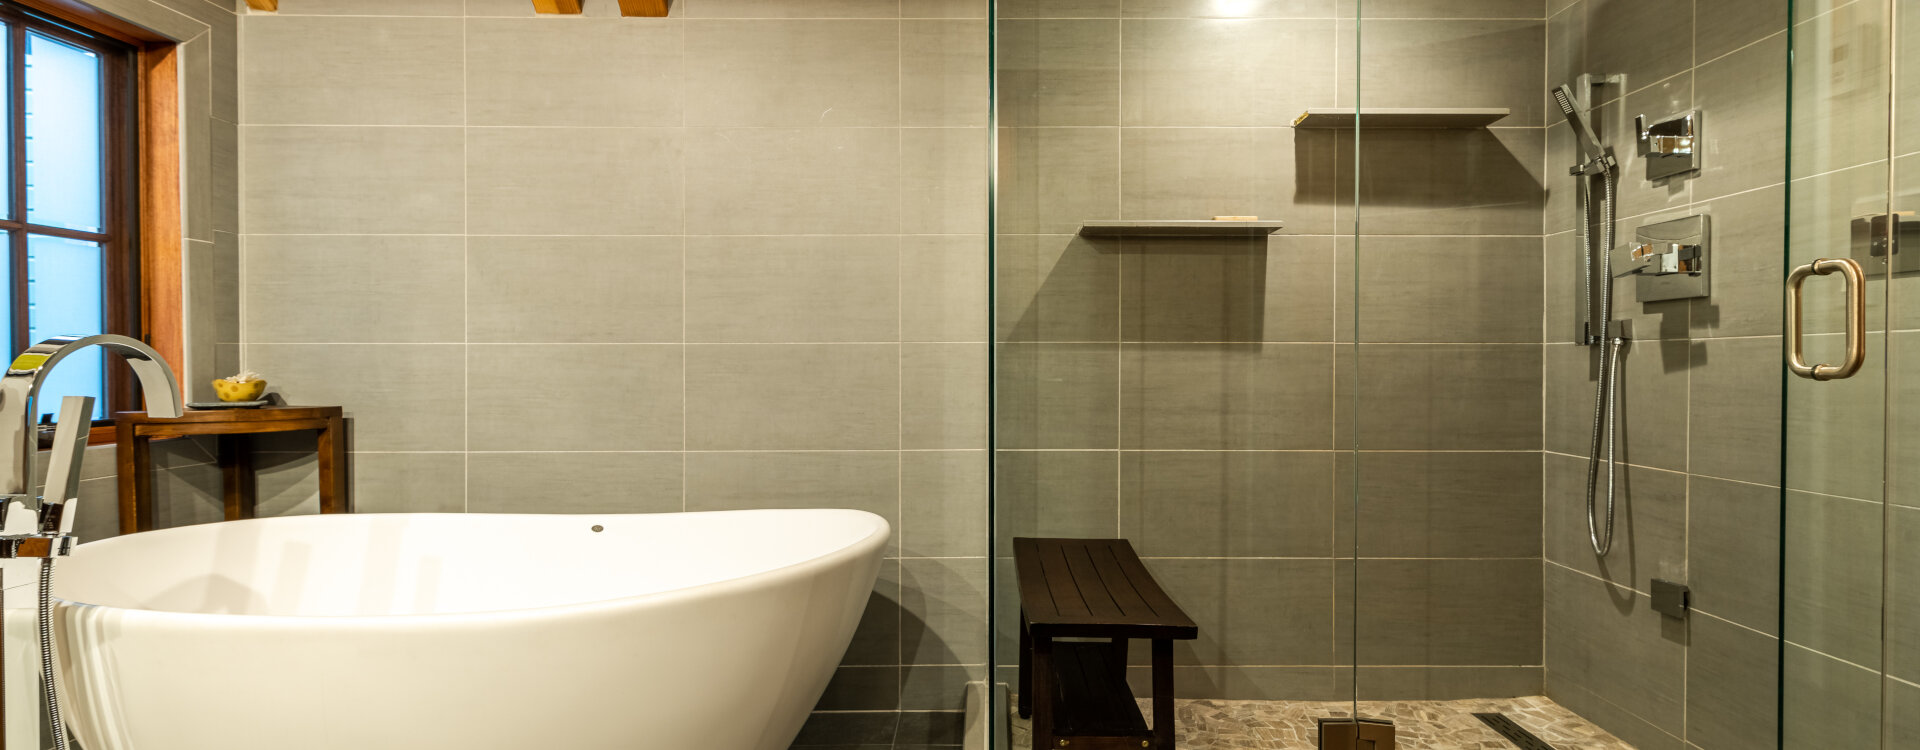 3.06-telluride-local-luxury-primary-bathroom-shower-tub